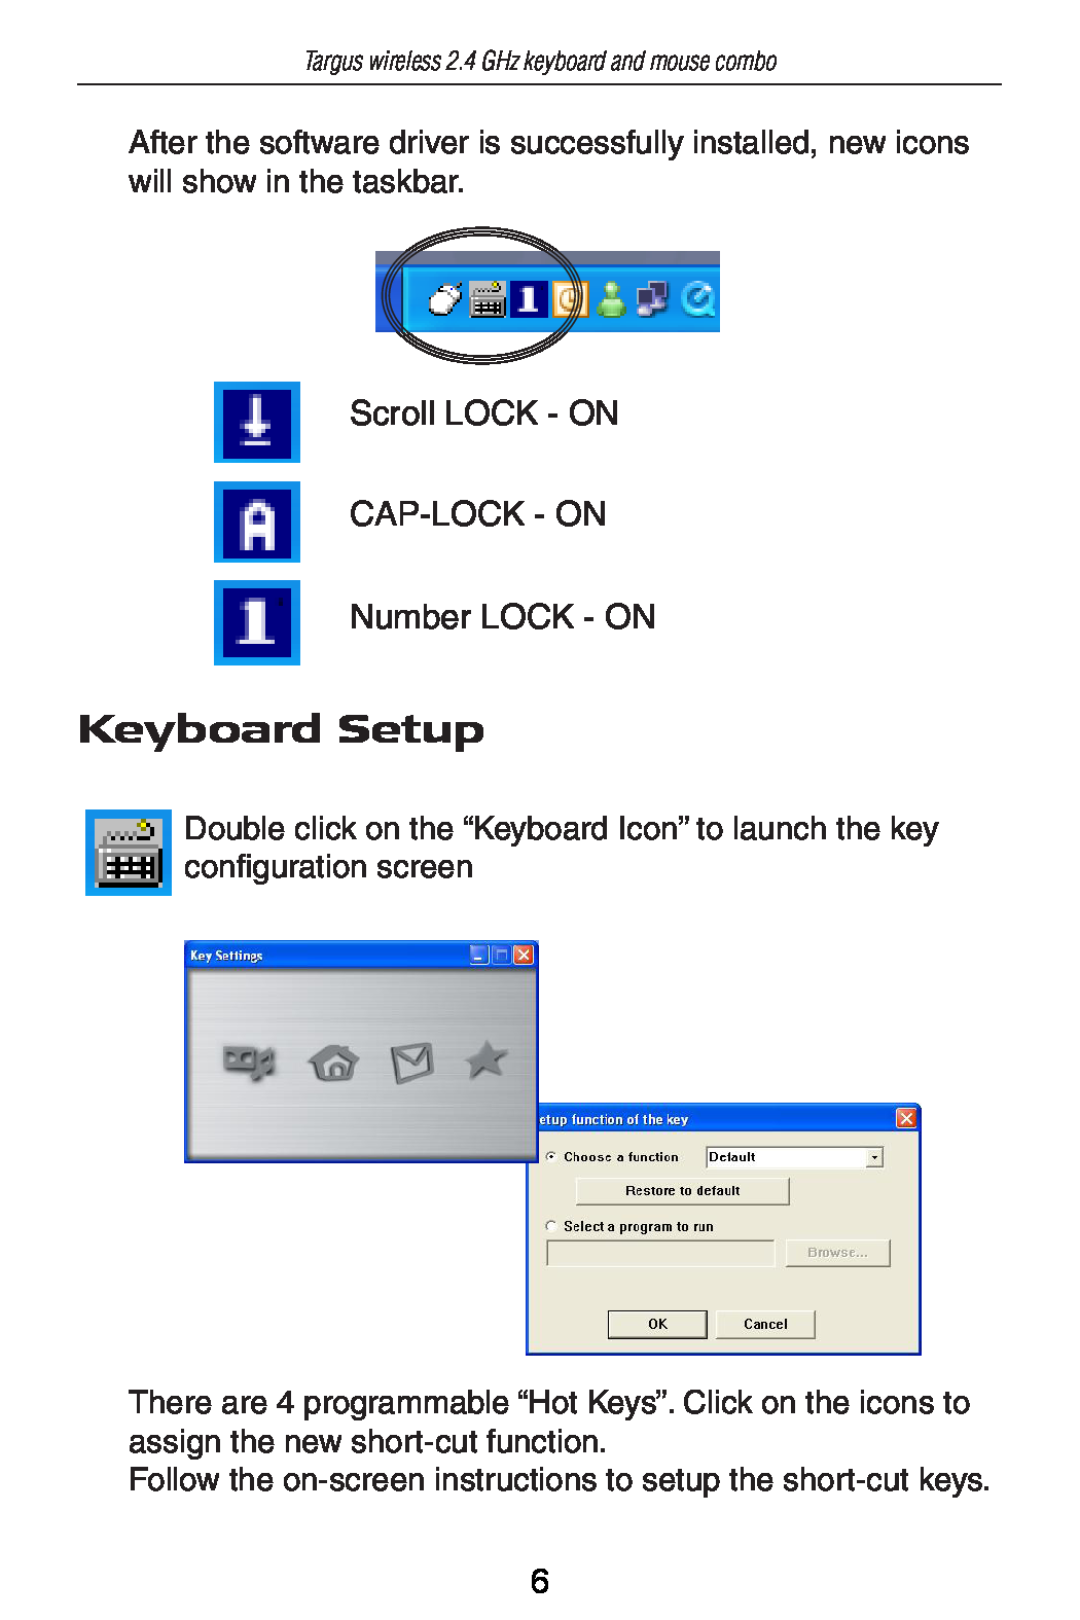 Targus AKM11 specifications Keyboard Setup, Scroll LOCK - ON CAP-LOCK - ON Number LOCK - ON 